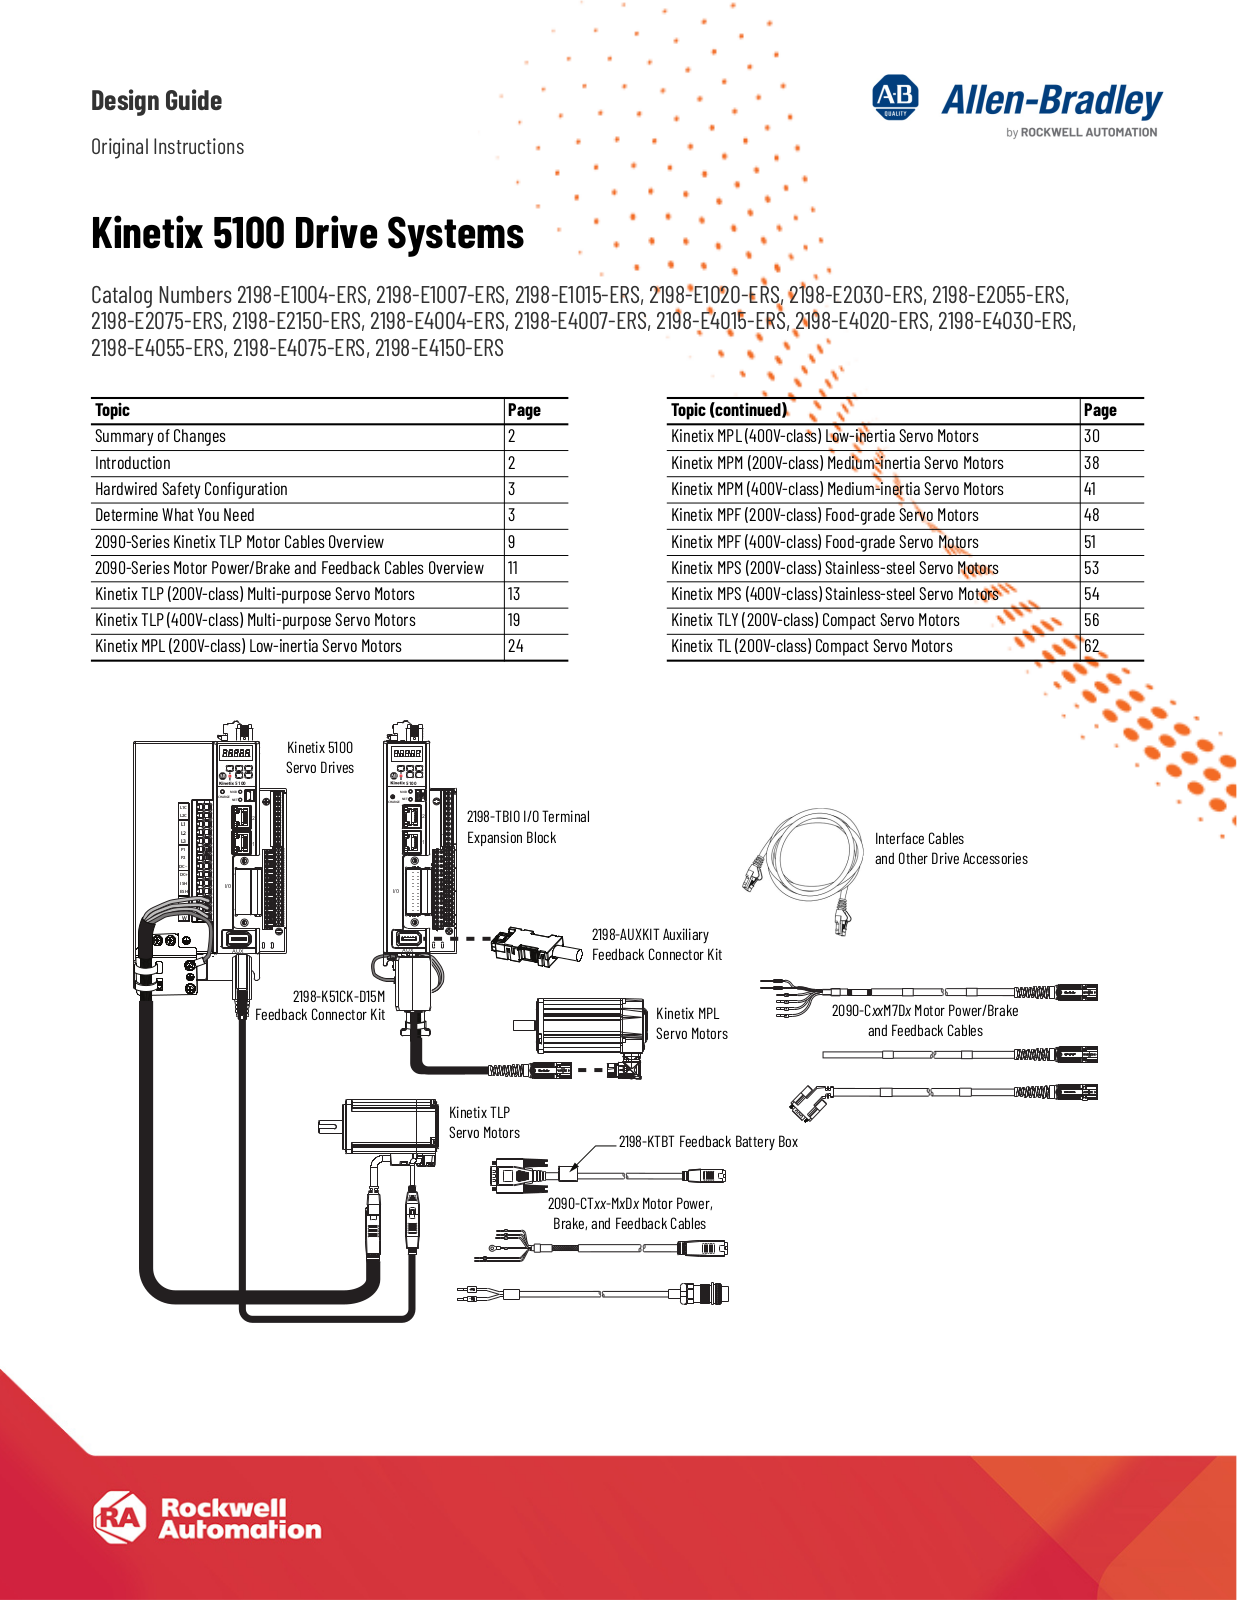 Rockwell Automation Kinetix 5100, 2198-E1004-ERS, 2198-E1007-ERS, 2198-E1015-ERS, 2198-E1020-ERS Design Guide